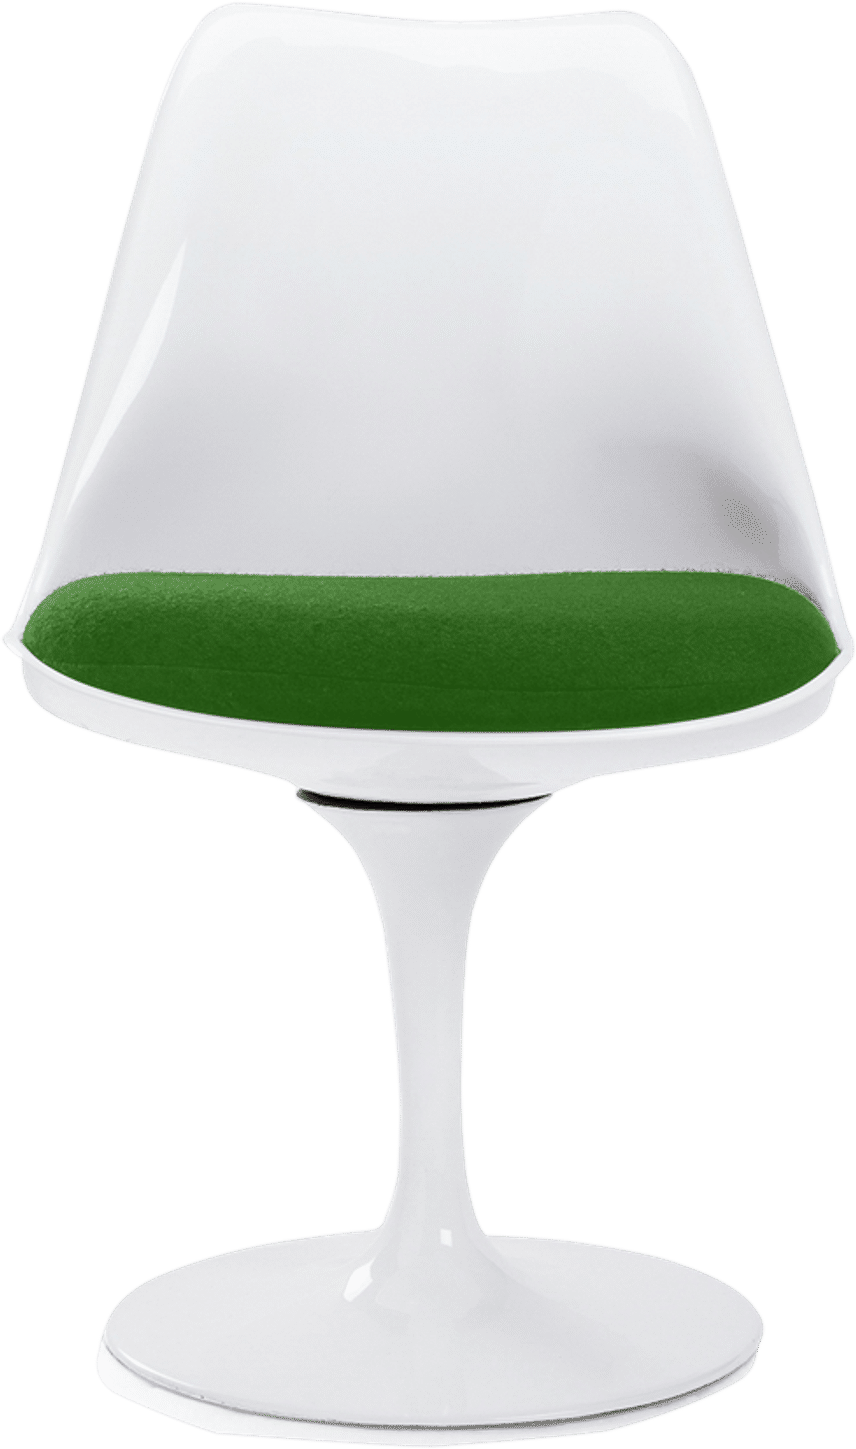 Tulip Chair - Fibreglass Green/White image.